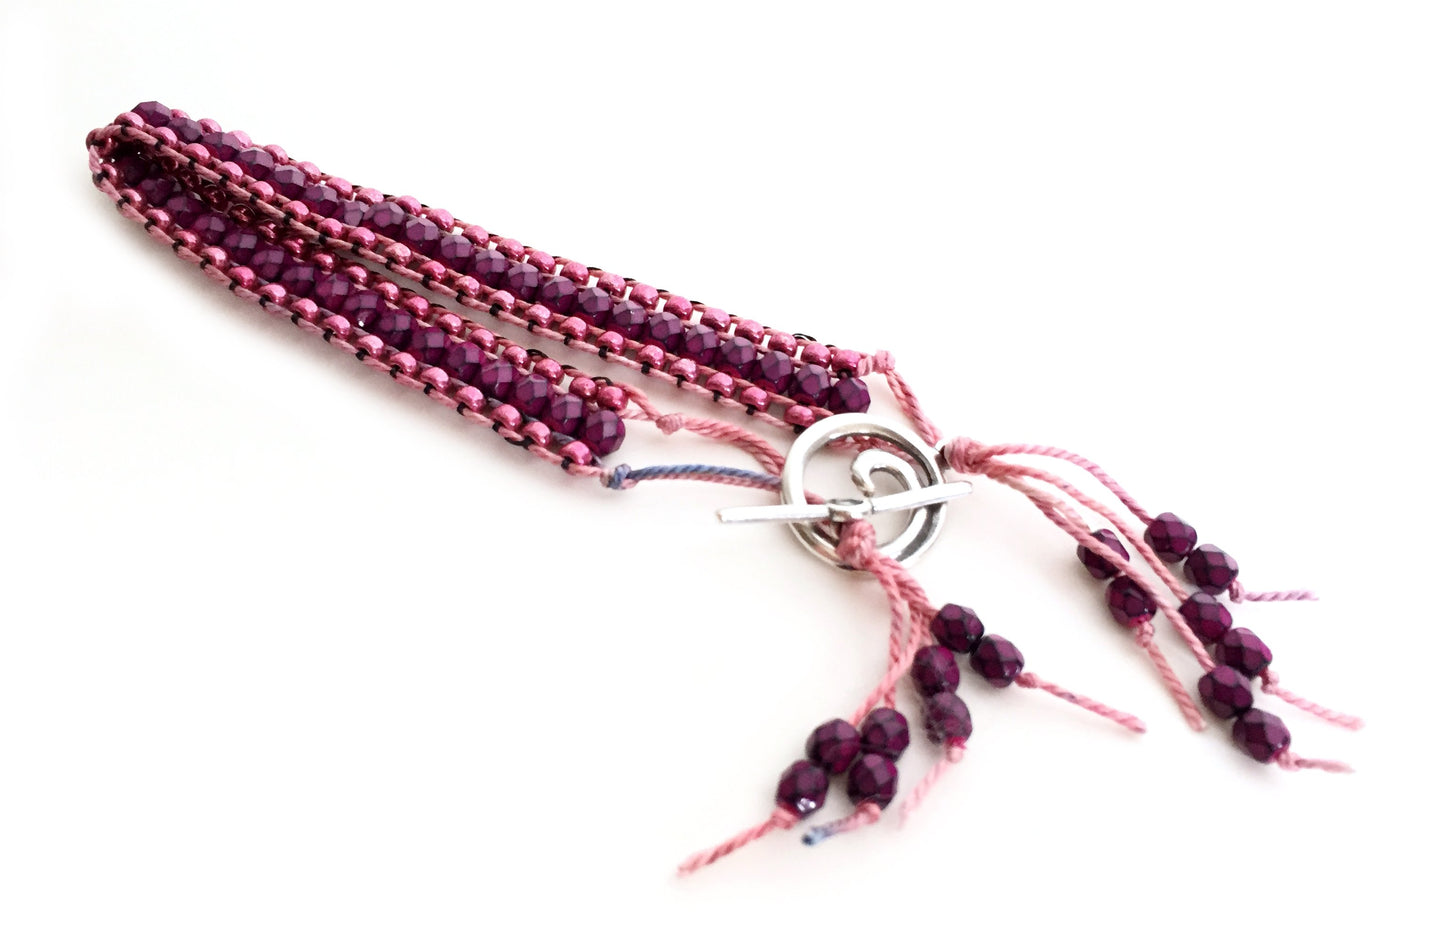 Bead Embroidery Bracelet Kit – Mirrix Looms